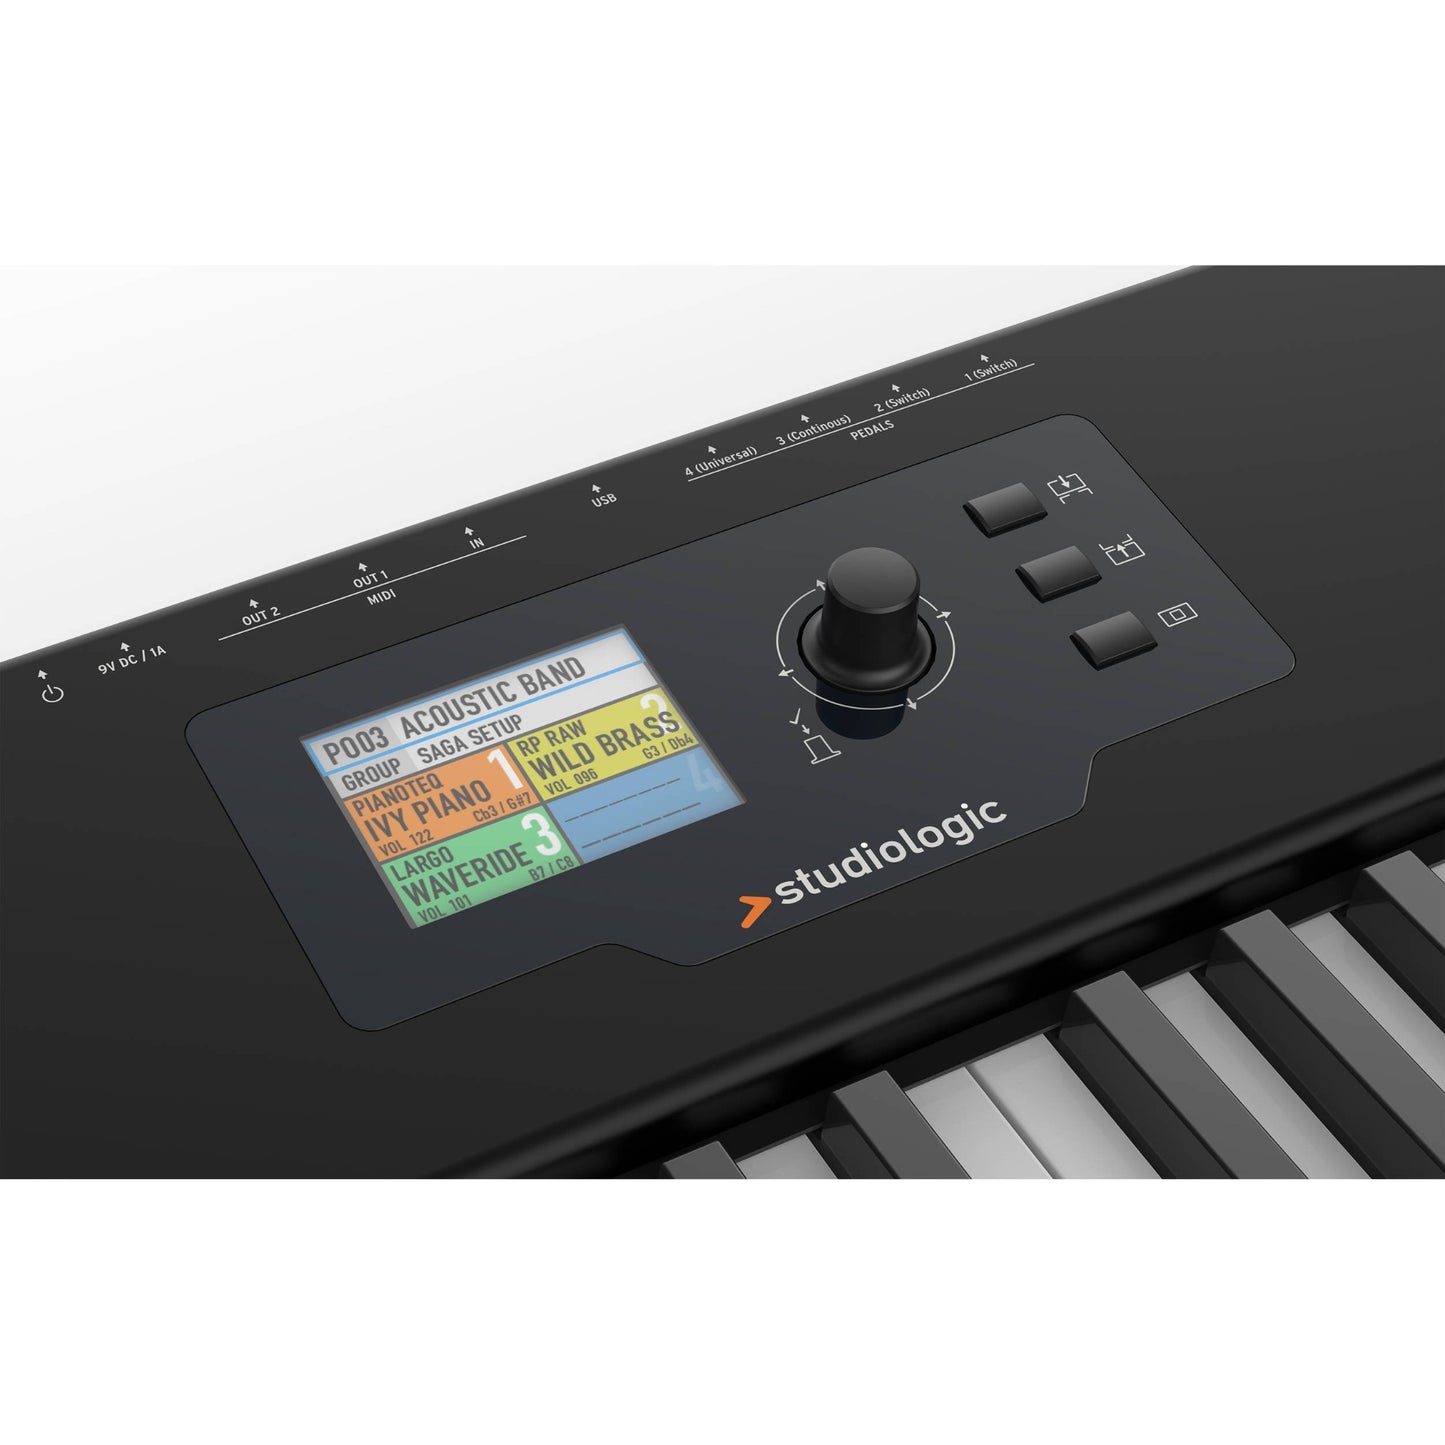 StudioLogic SL73 Studio - 73-Key USB/MIDI Keyboard Controller